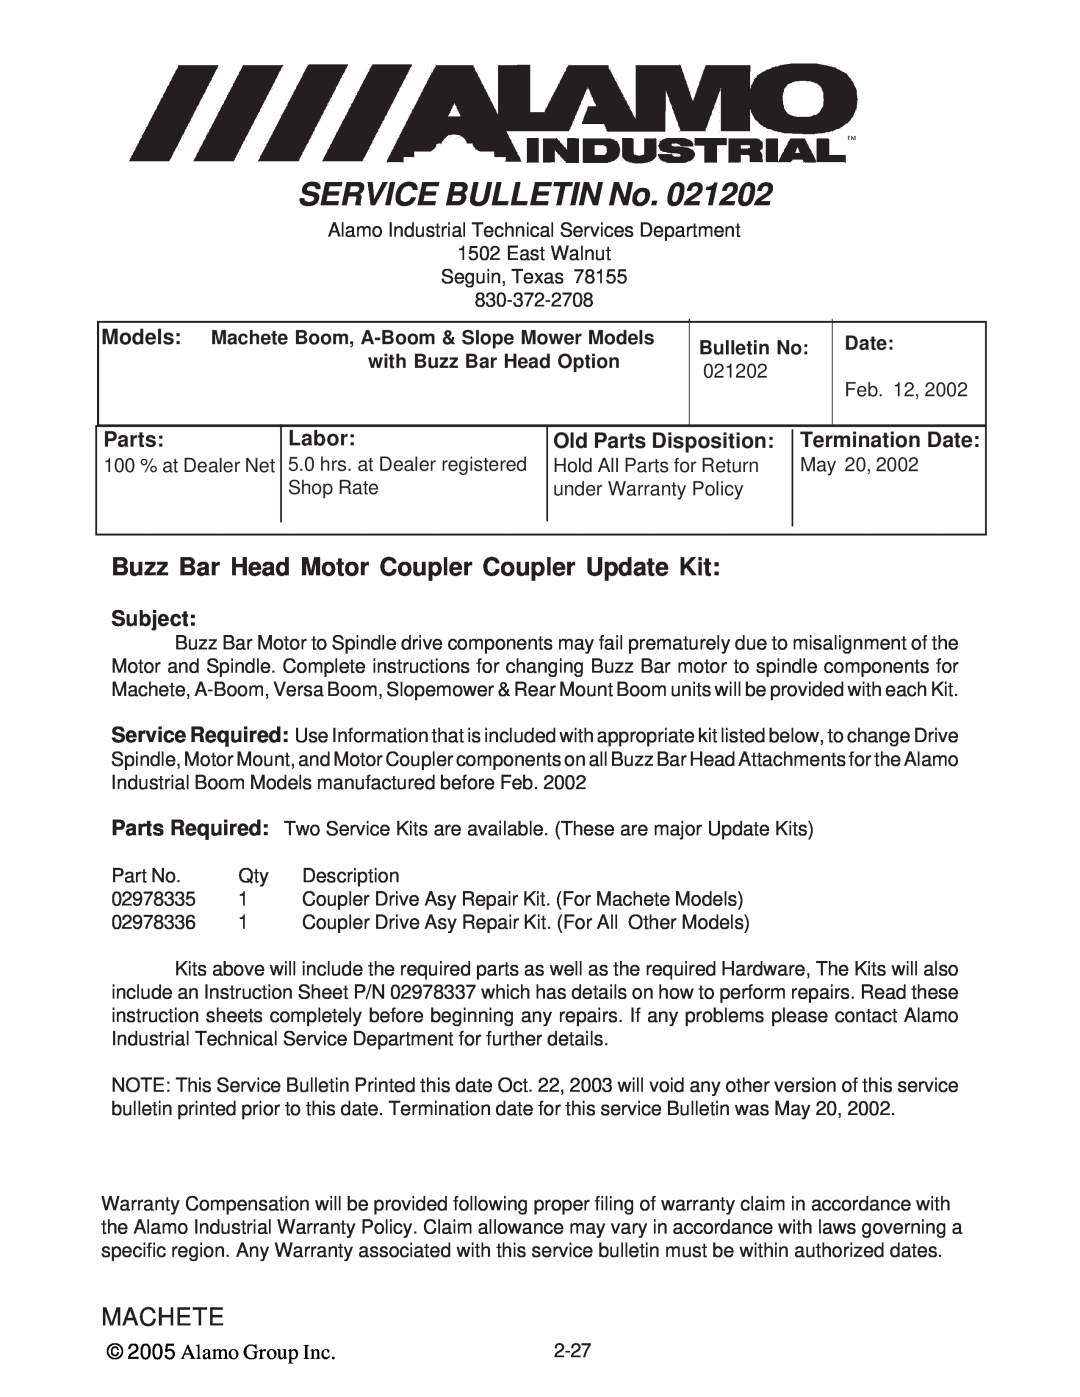 Alamo T 7740 Buzz Bar Head Motor Coupler Coupler Update Kit, Models: Machete Boom, A-Boom& Slope Mower Models, Parts, Date 